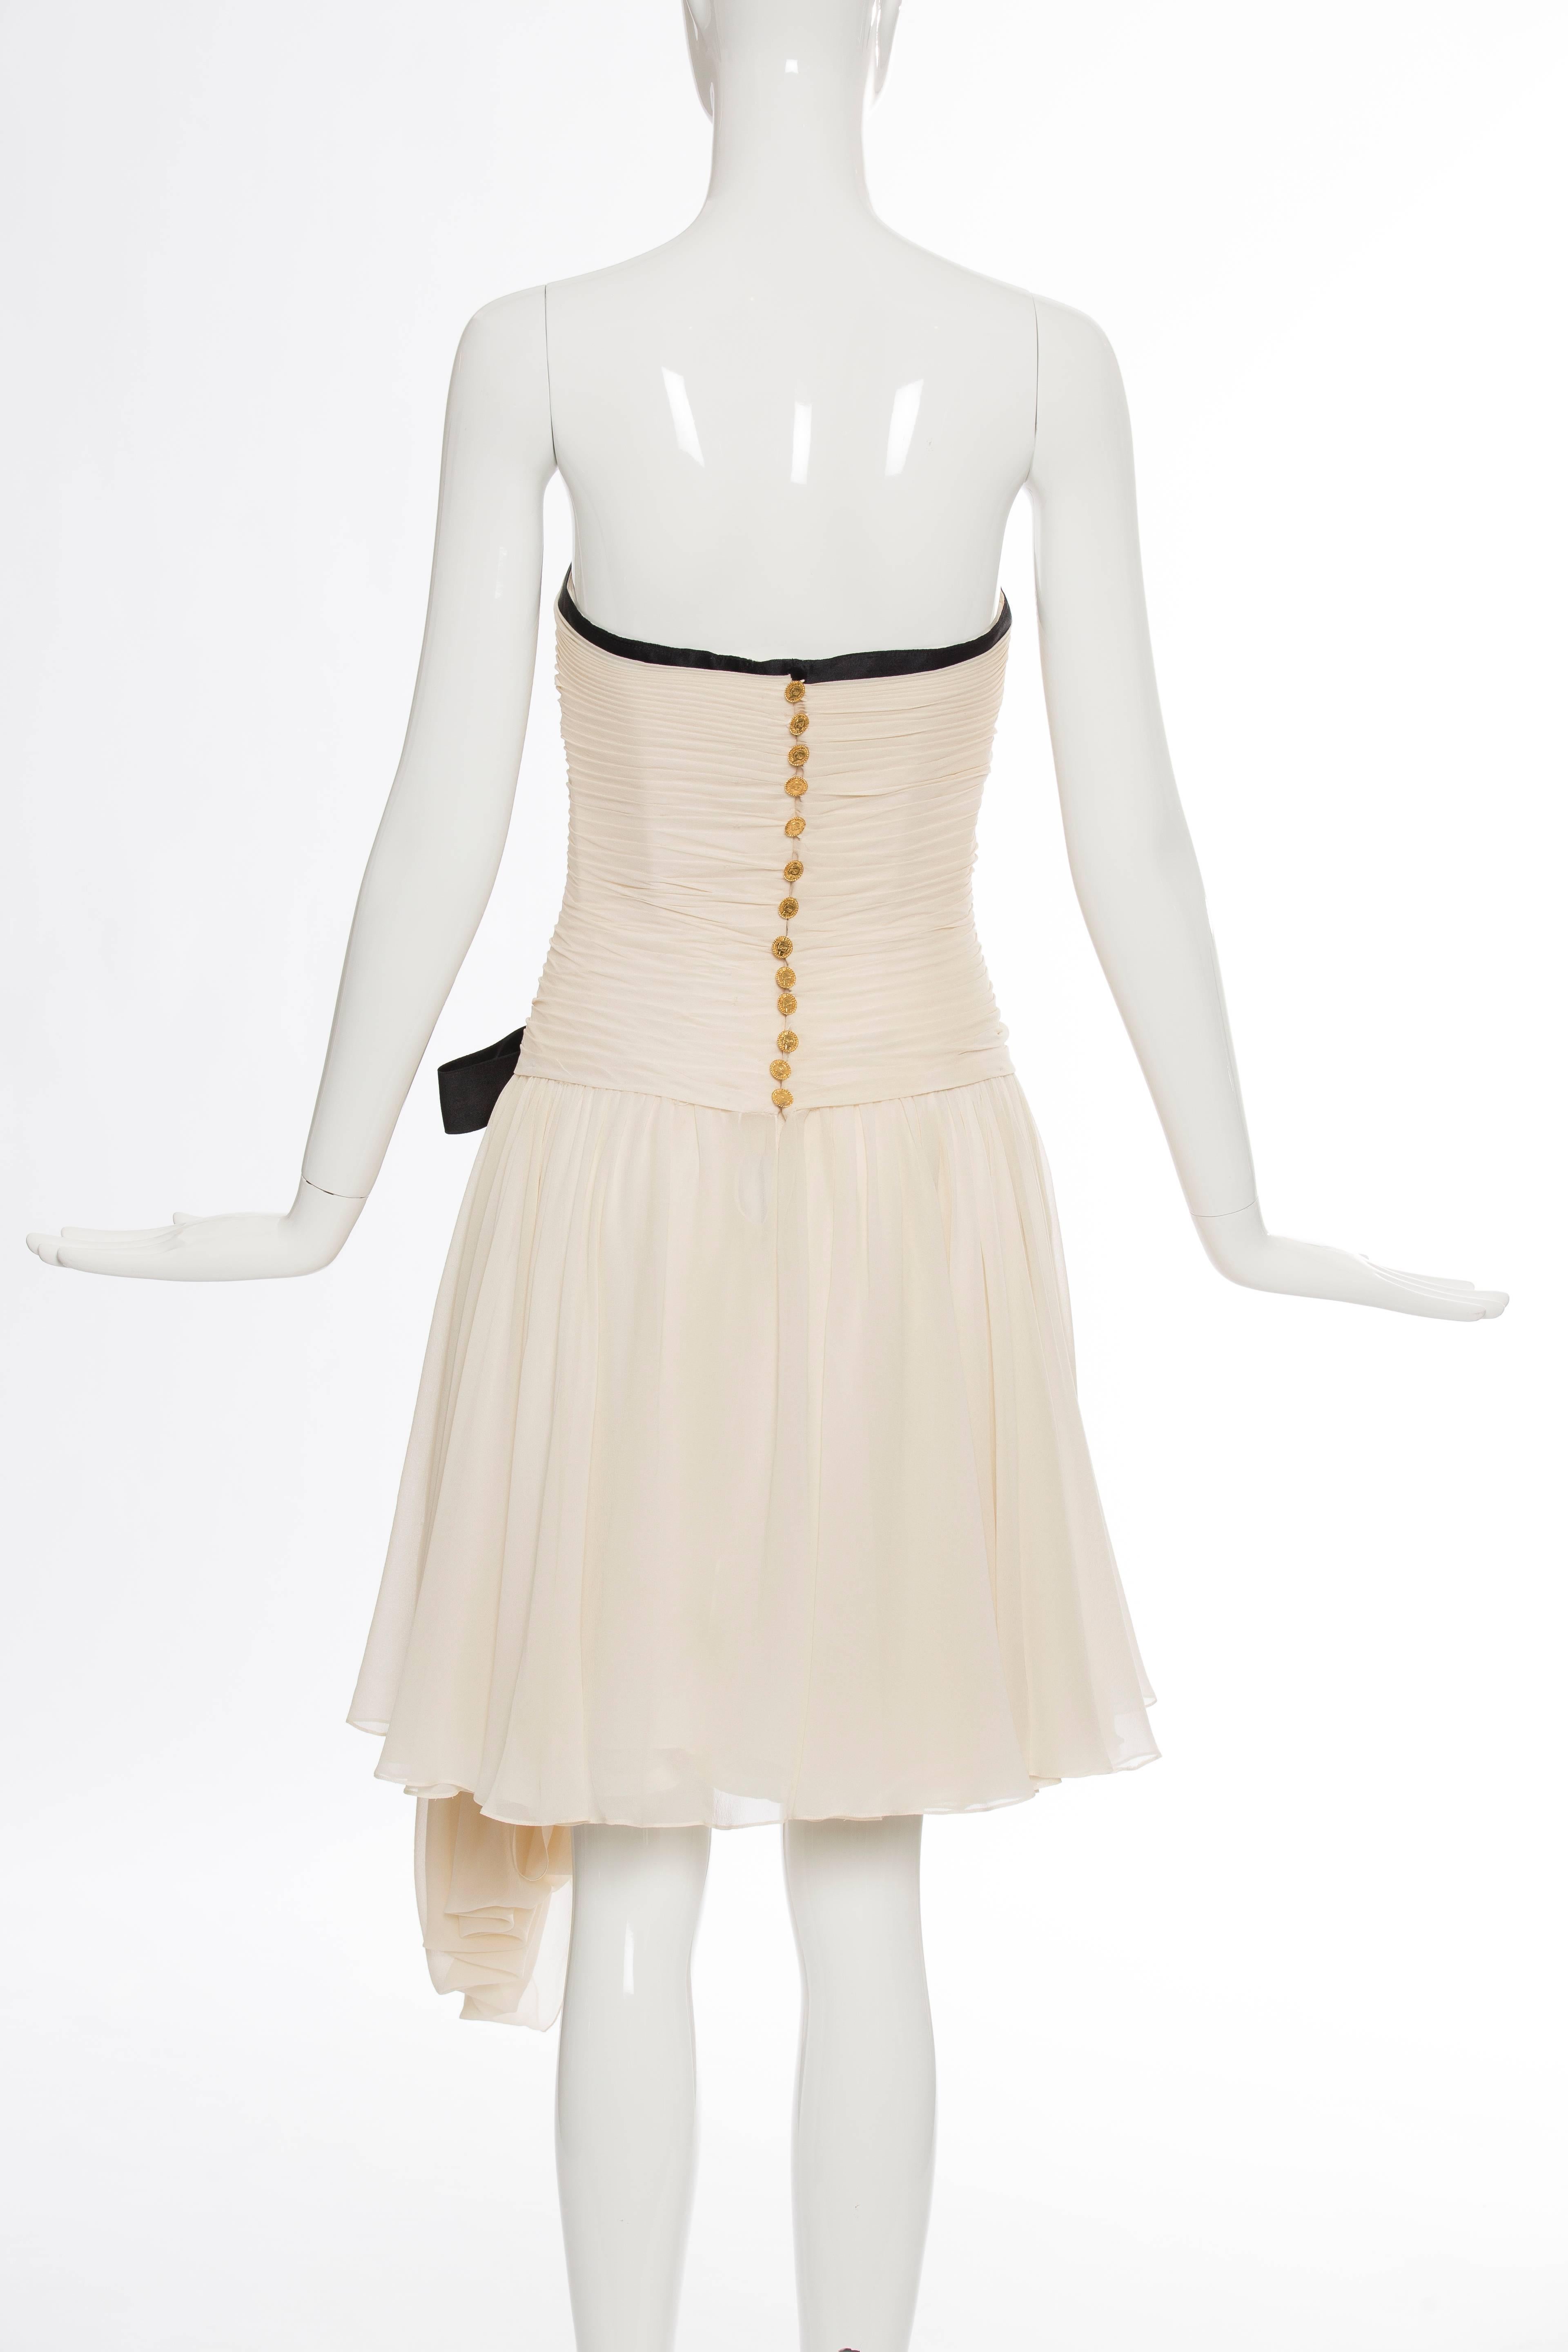 Beige Chanel Silk Chiffon Strapless Dress, Circa 1980s